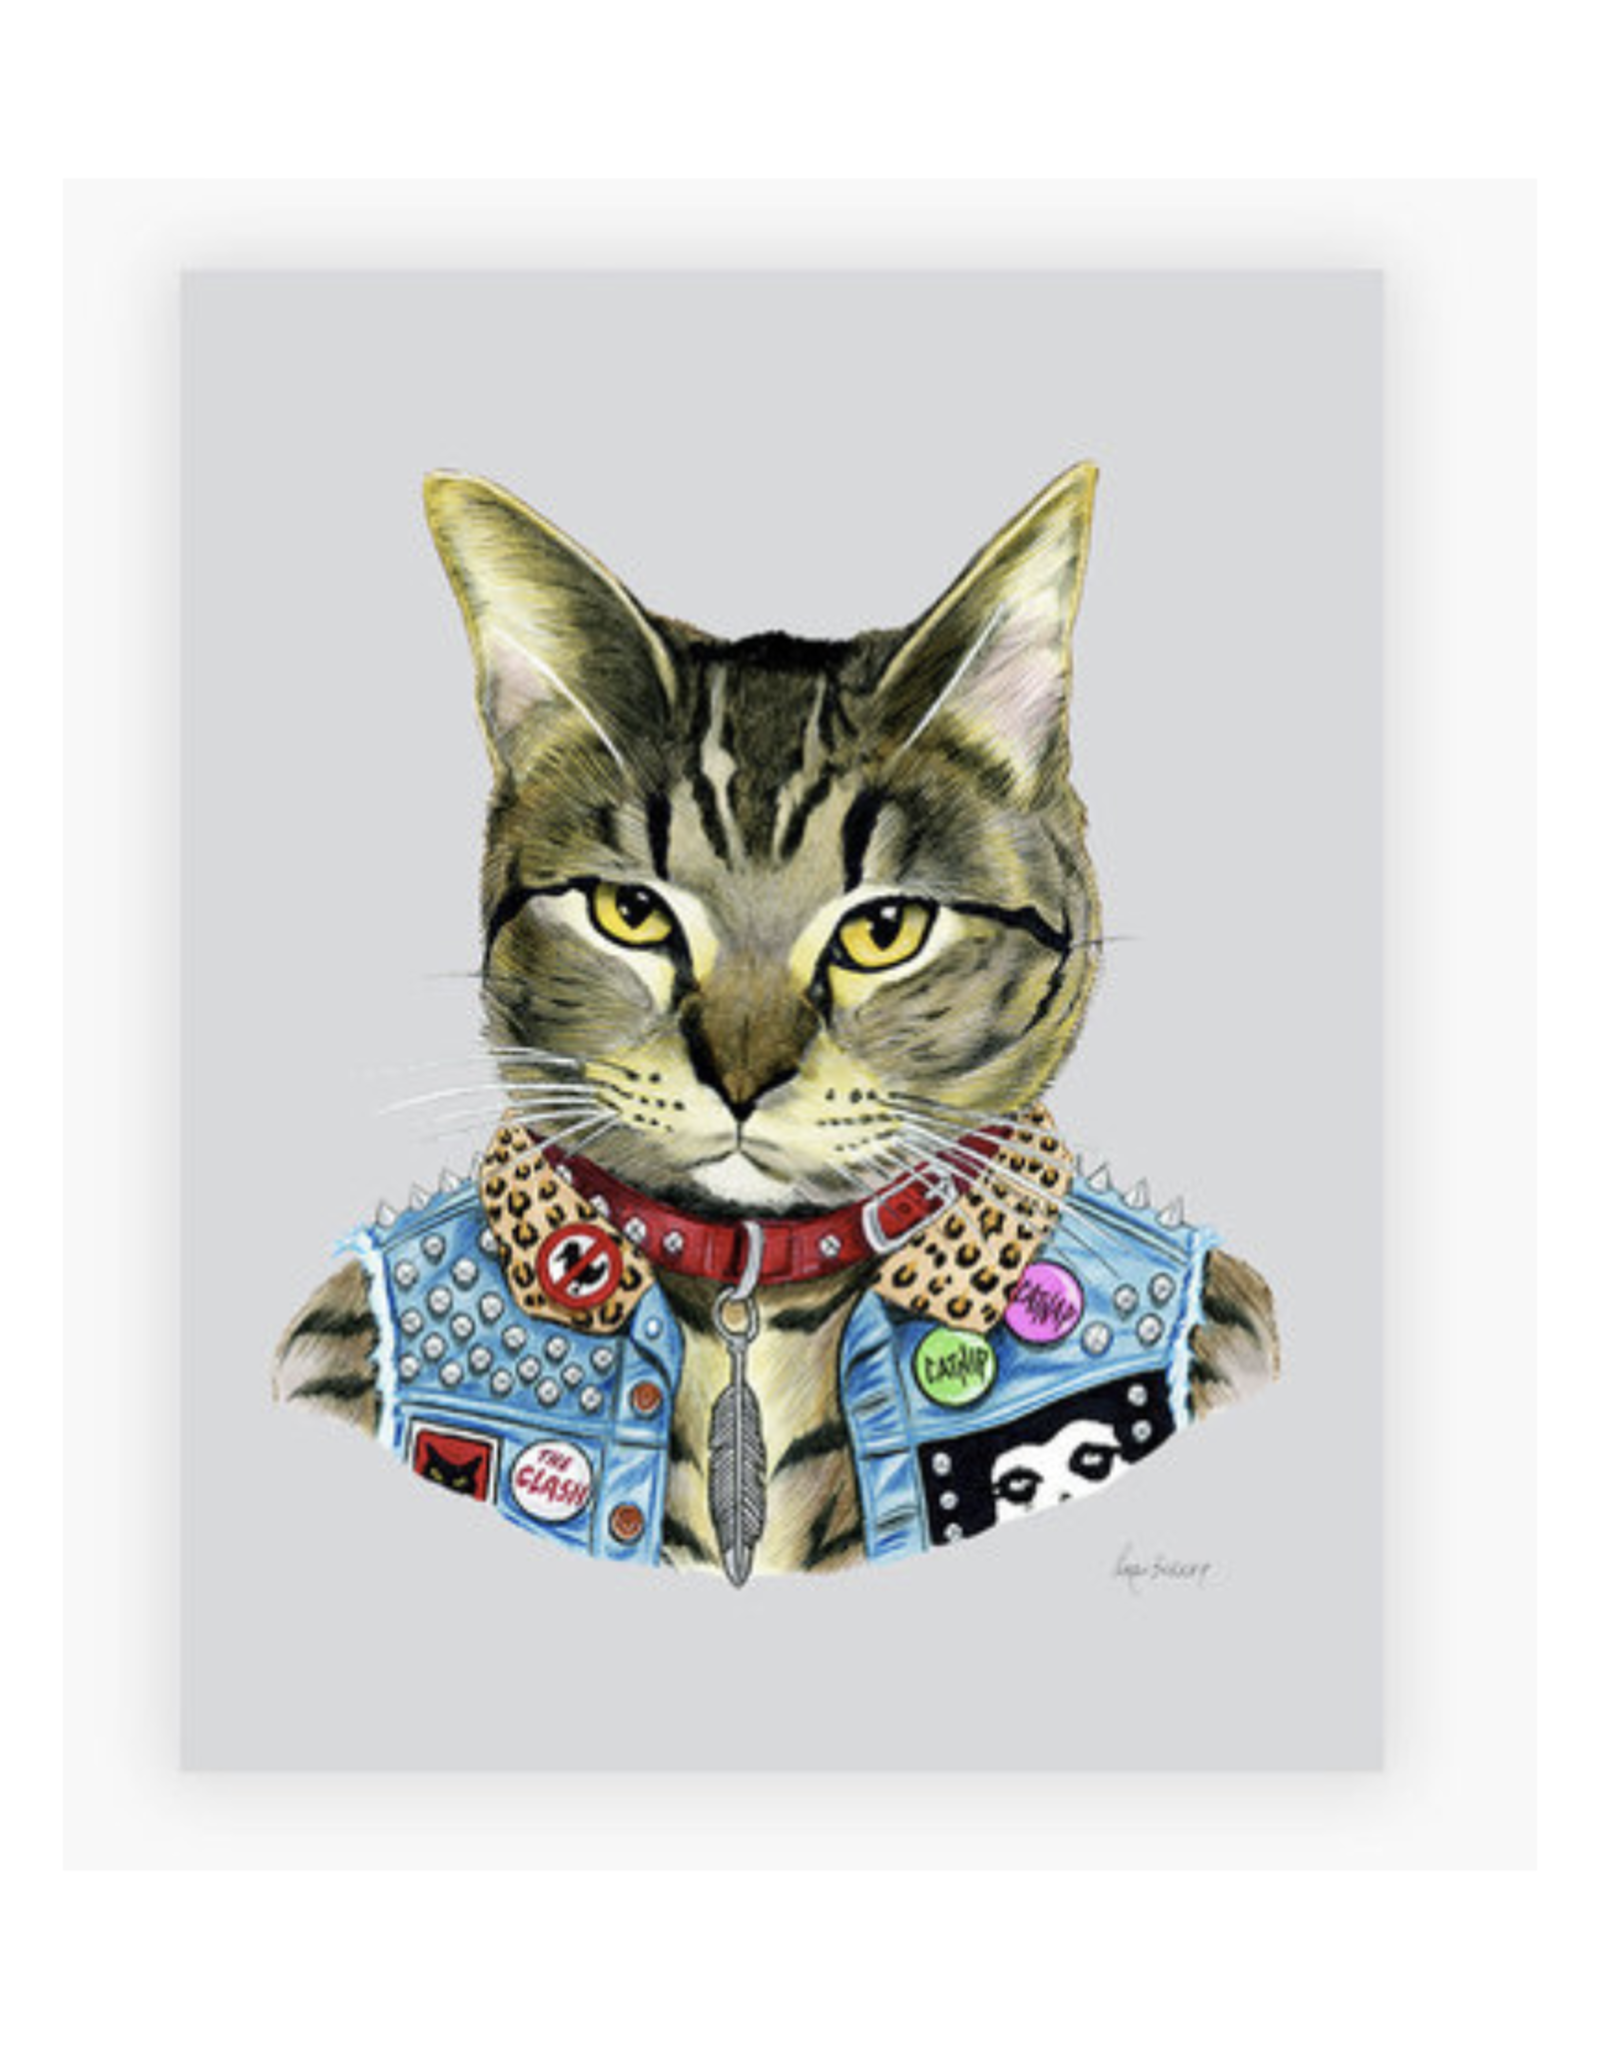 Punk Cat Print